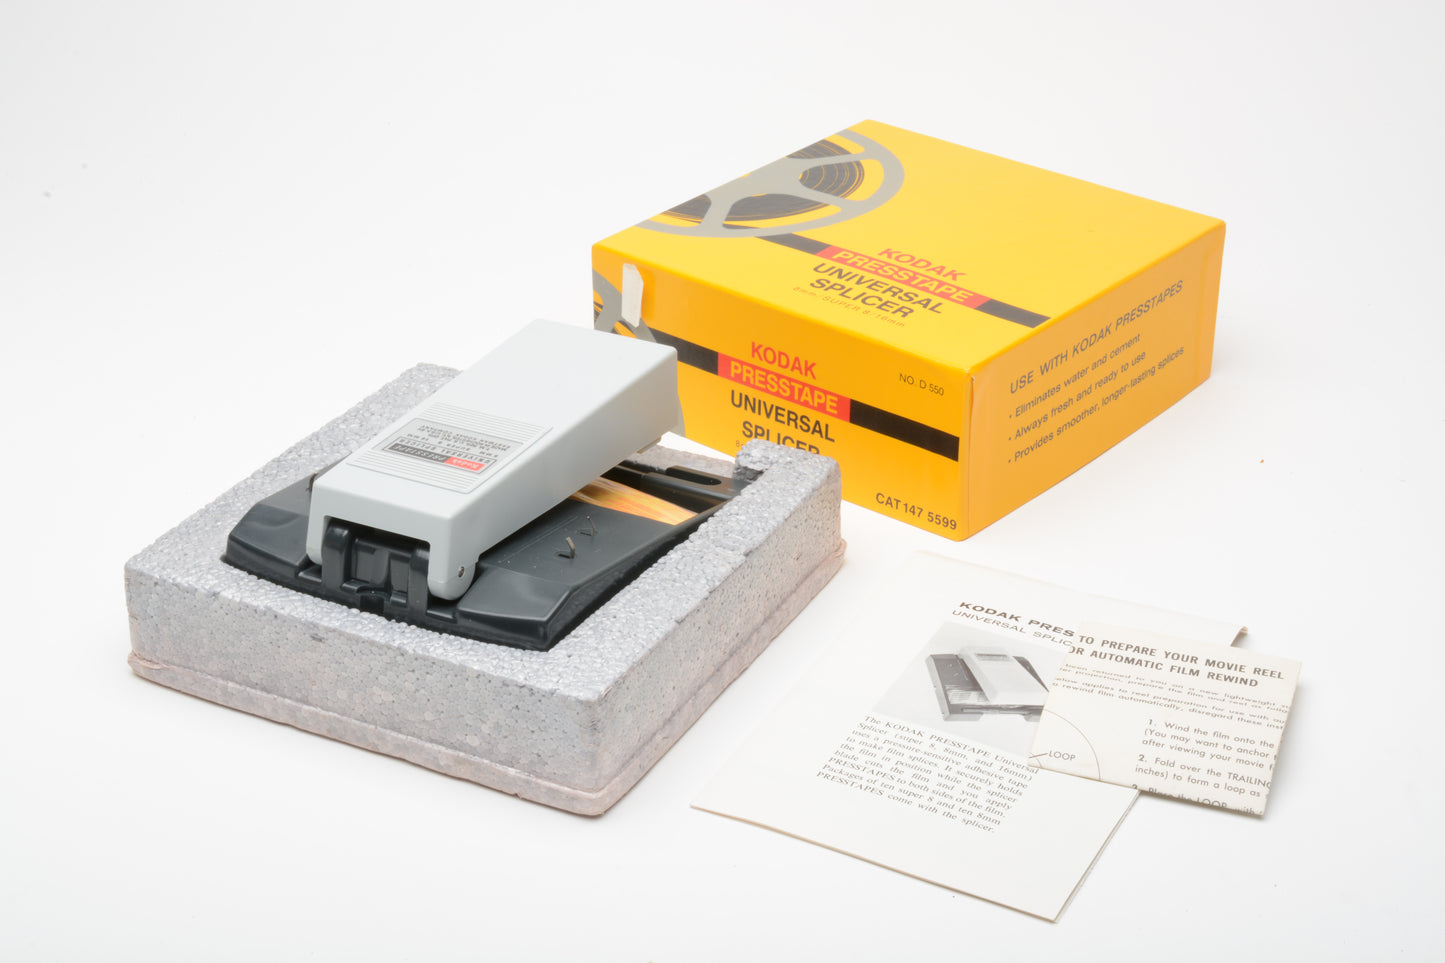 Kodak Presstape Universal movie film splicer, Boxed, clean w/tapes